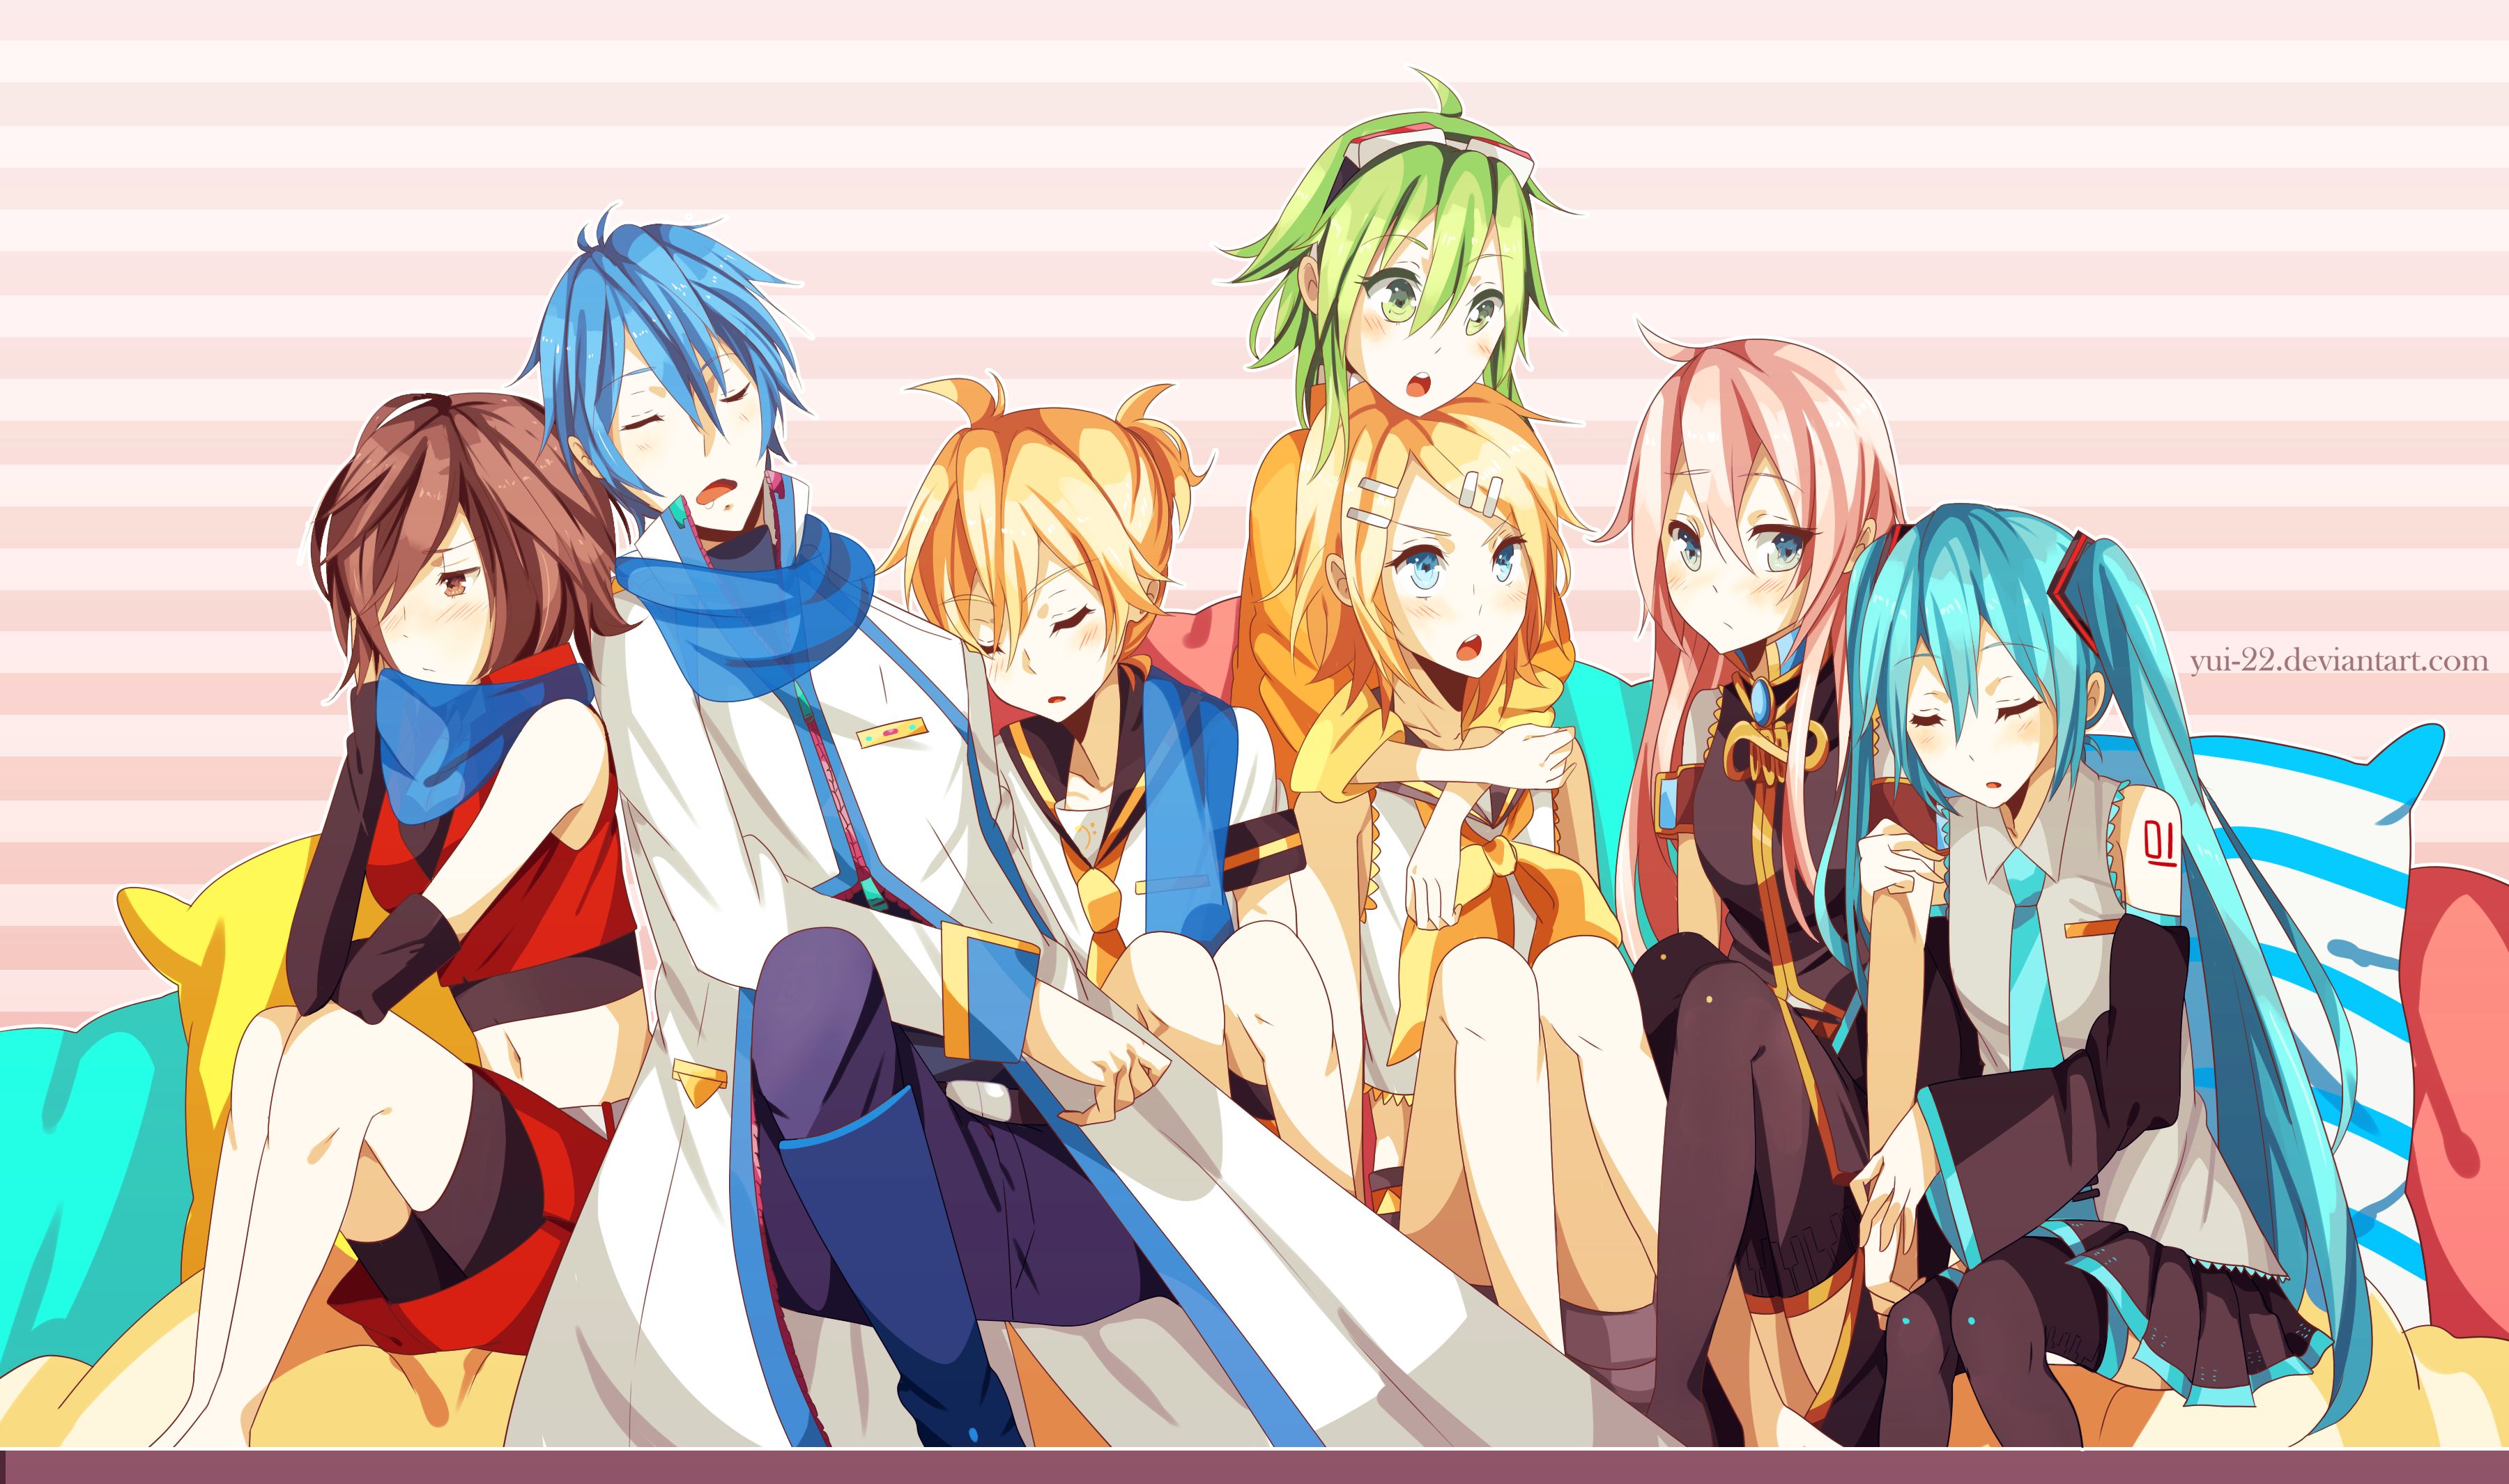 Baixar papel de parede para celular de Anime, Vocaloid, Hatsune Miku, Luka Megurine, Rin Kagamine, Gumi (Vocaloide), Kaito (Vocaloide), Len Kagamine, Meiko (Vocaloid) gratuito.